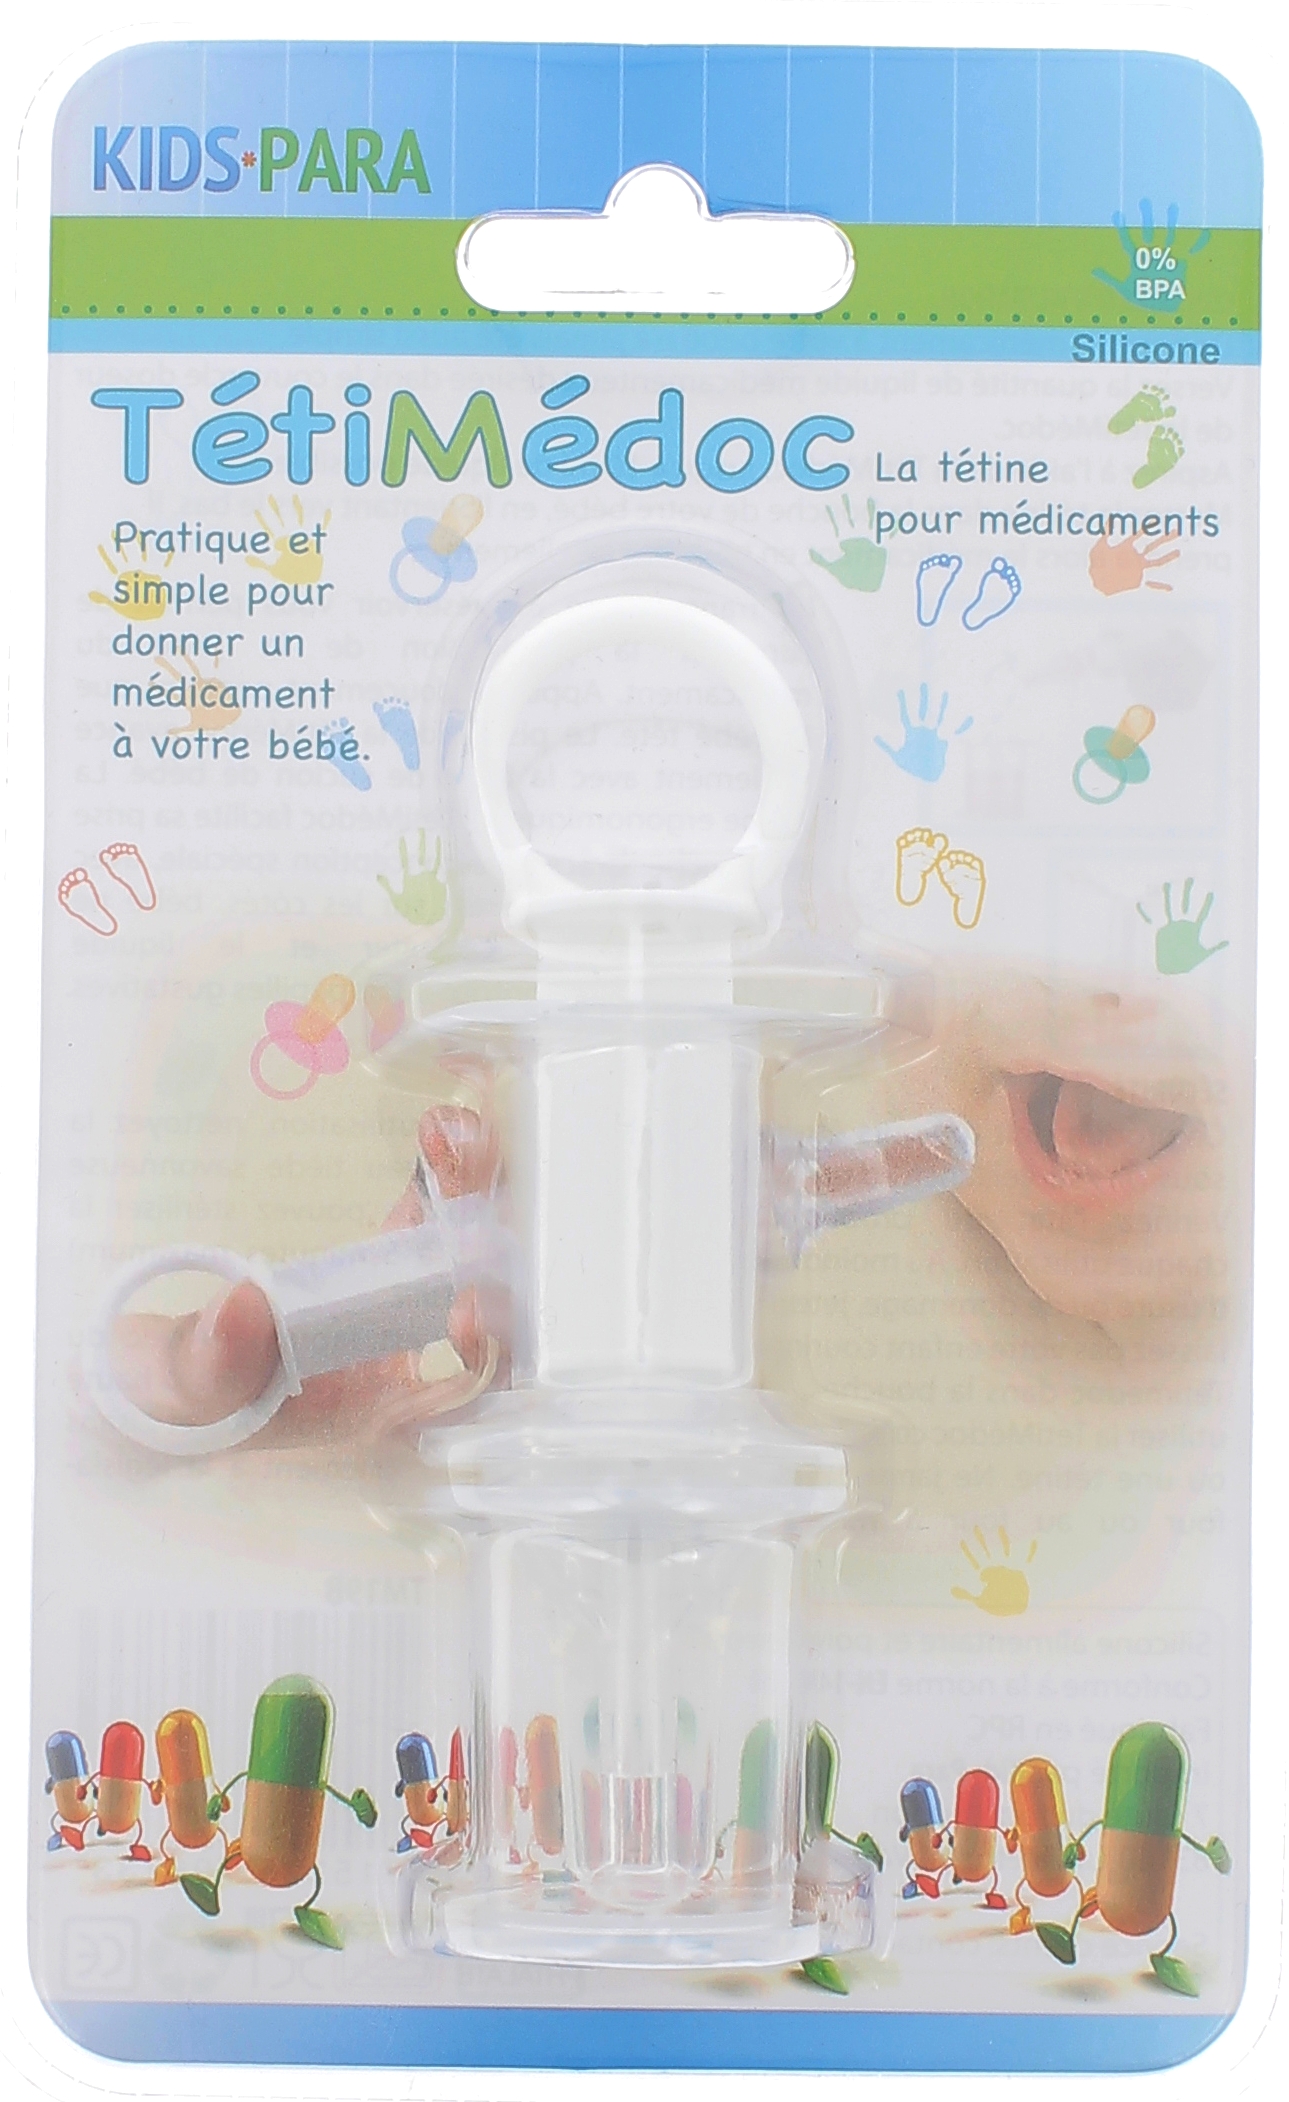 KIDS PARA Tétimédoc - Tétine pour médicaments - Parapharmacie Prado Mermoz